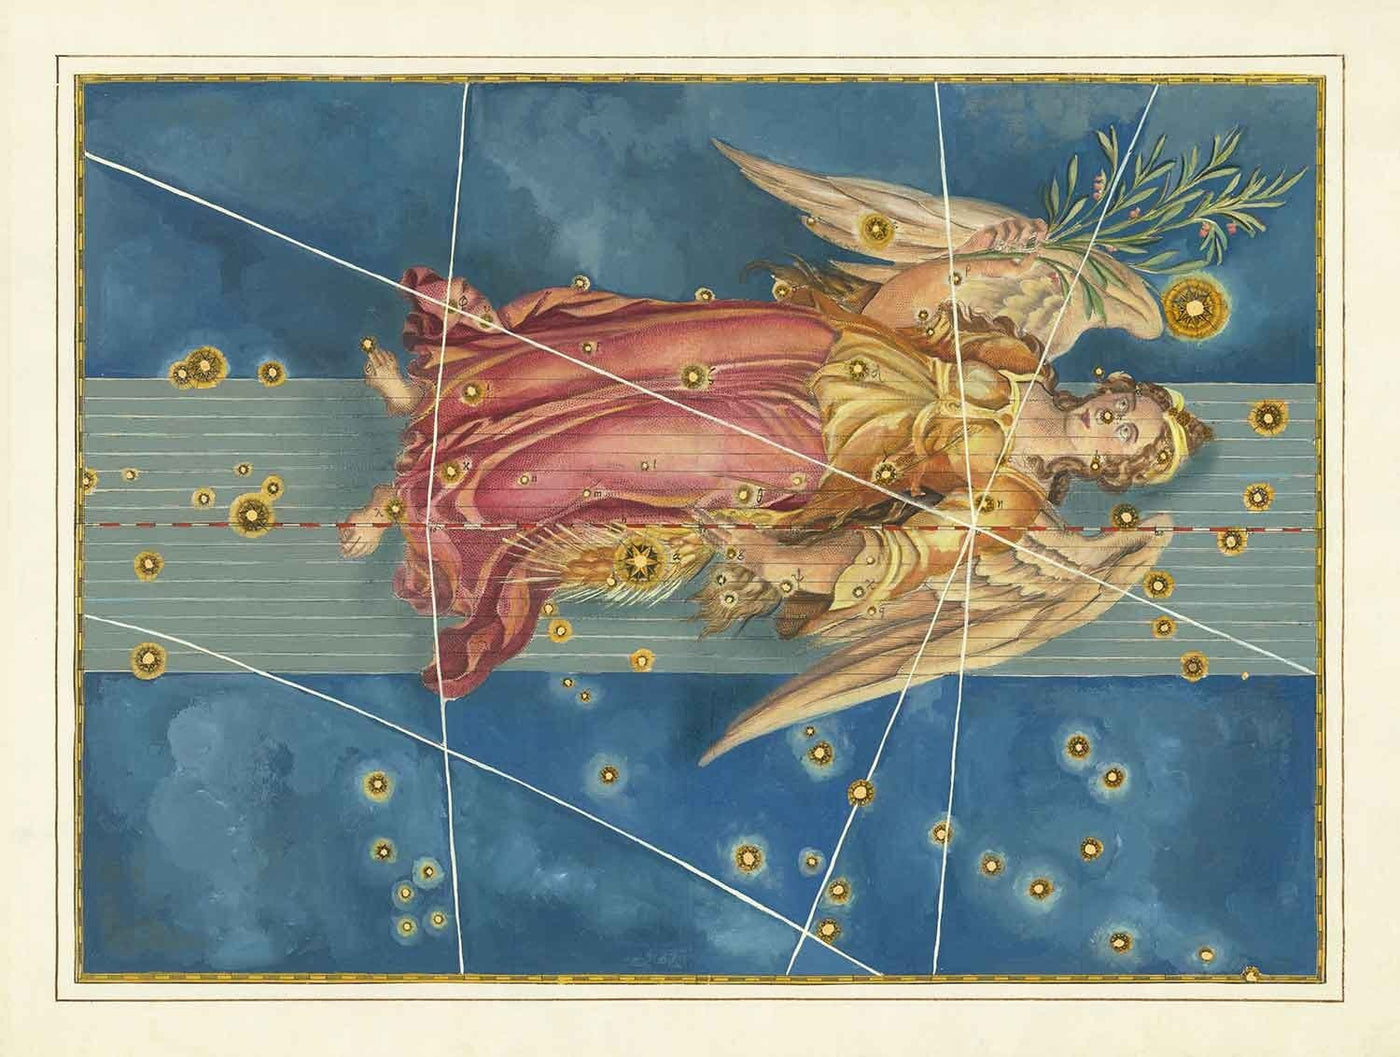 Old Star Map of Virgo, 1603 by Johann Bayer - Zodiac Astrology Chart - The Maiden Horoscope Sign